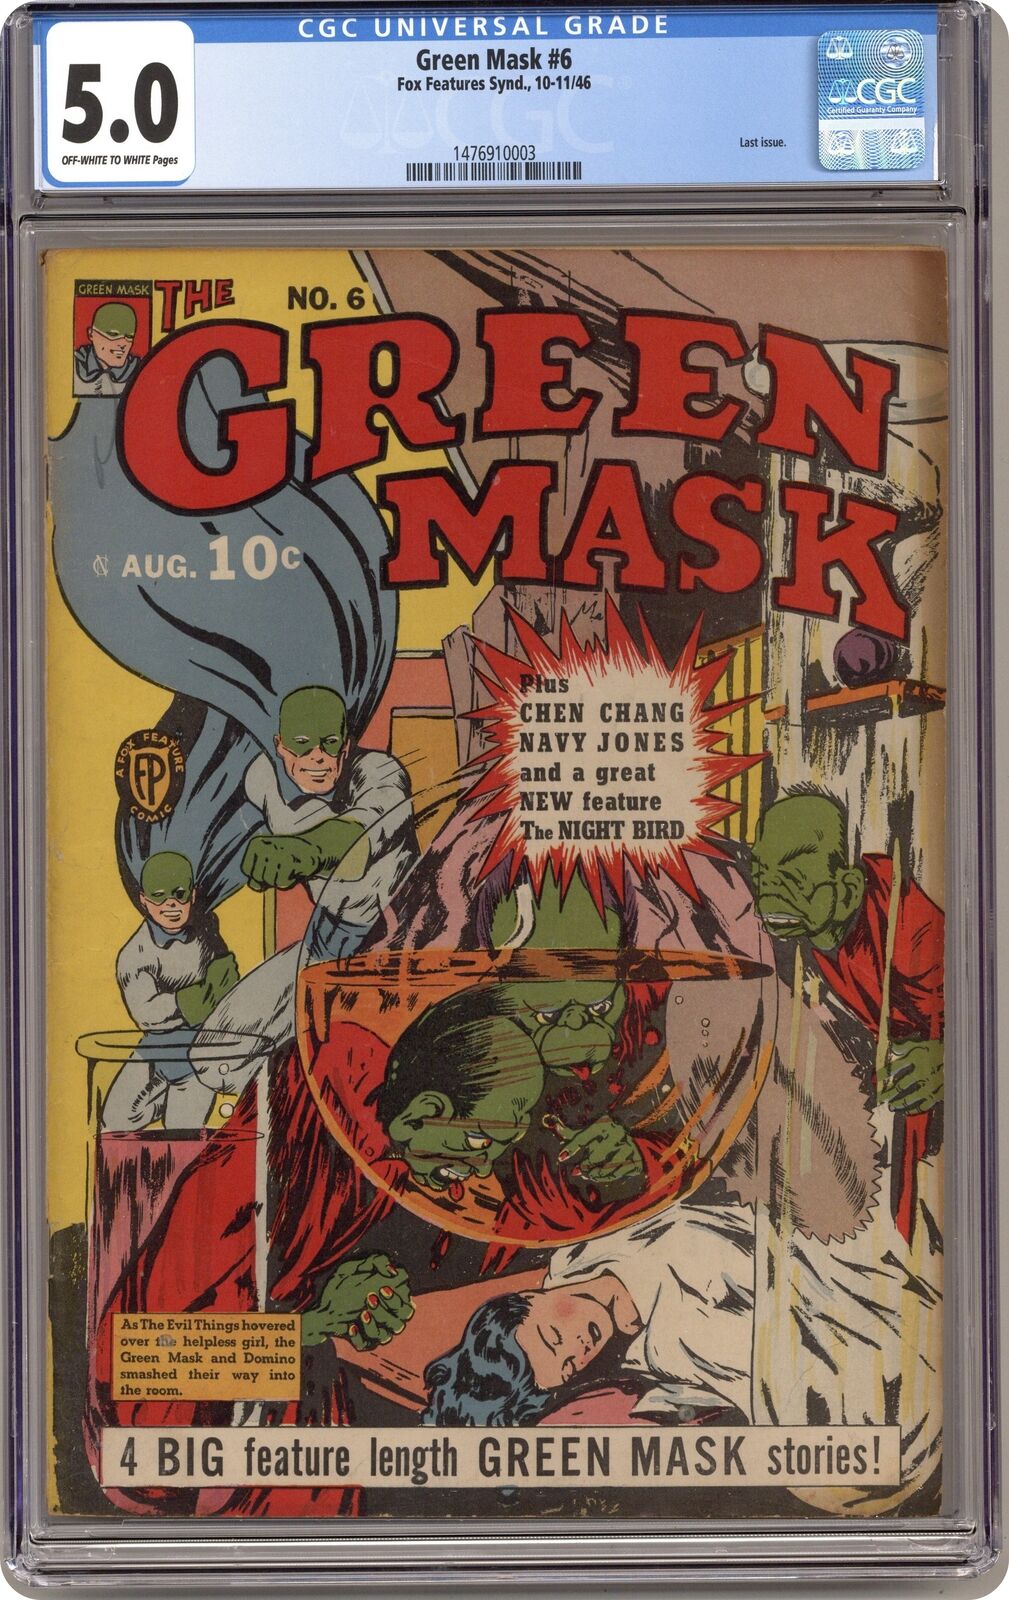 Green Mask Vol. 1 #6 CGC 5.0 1941 1476910003